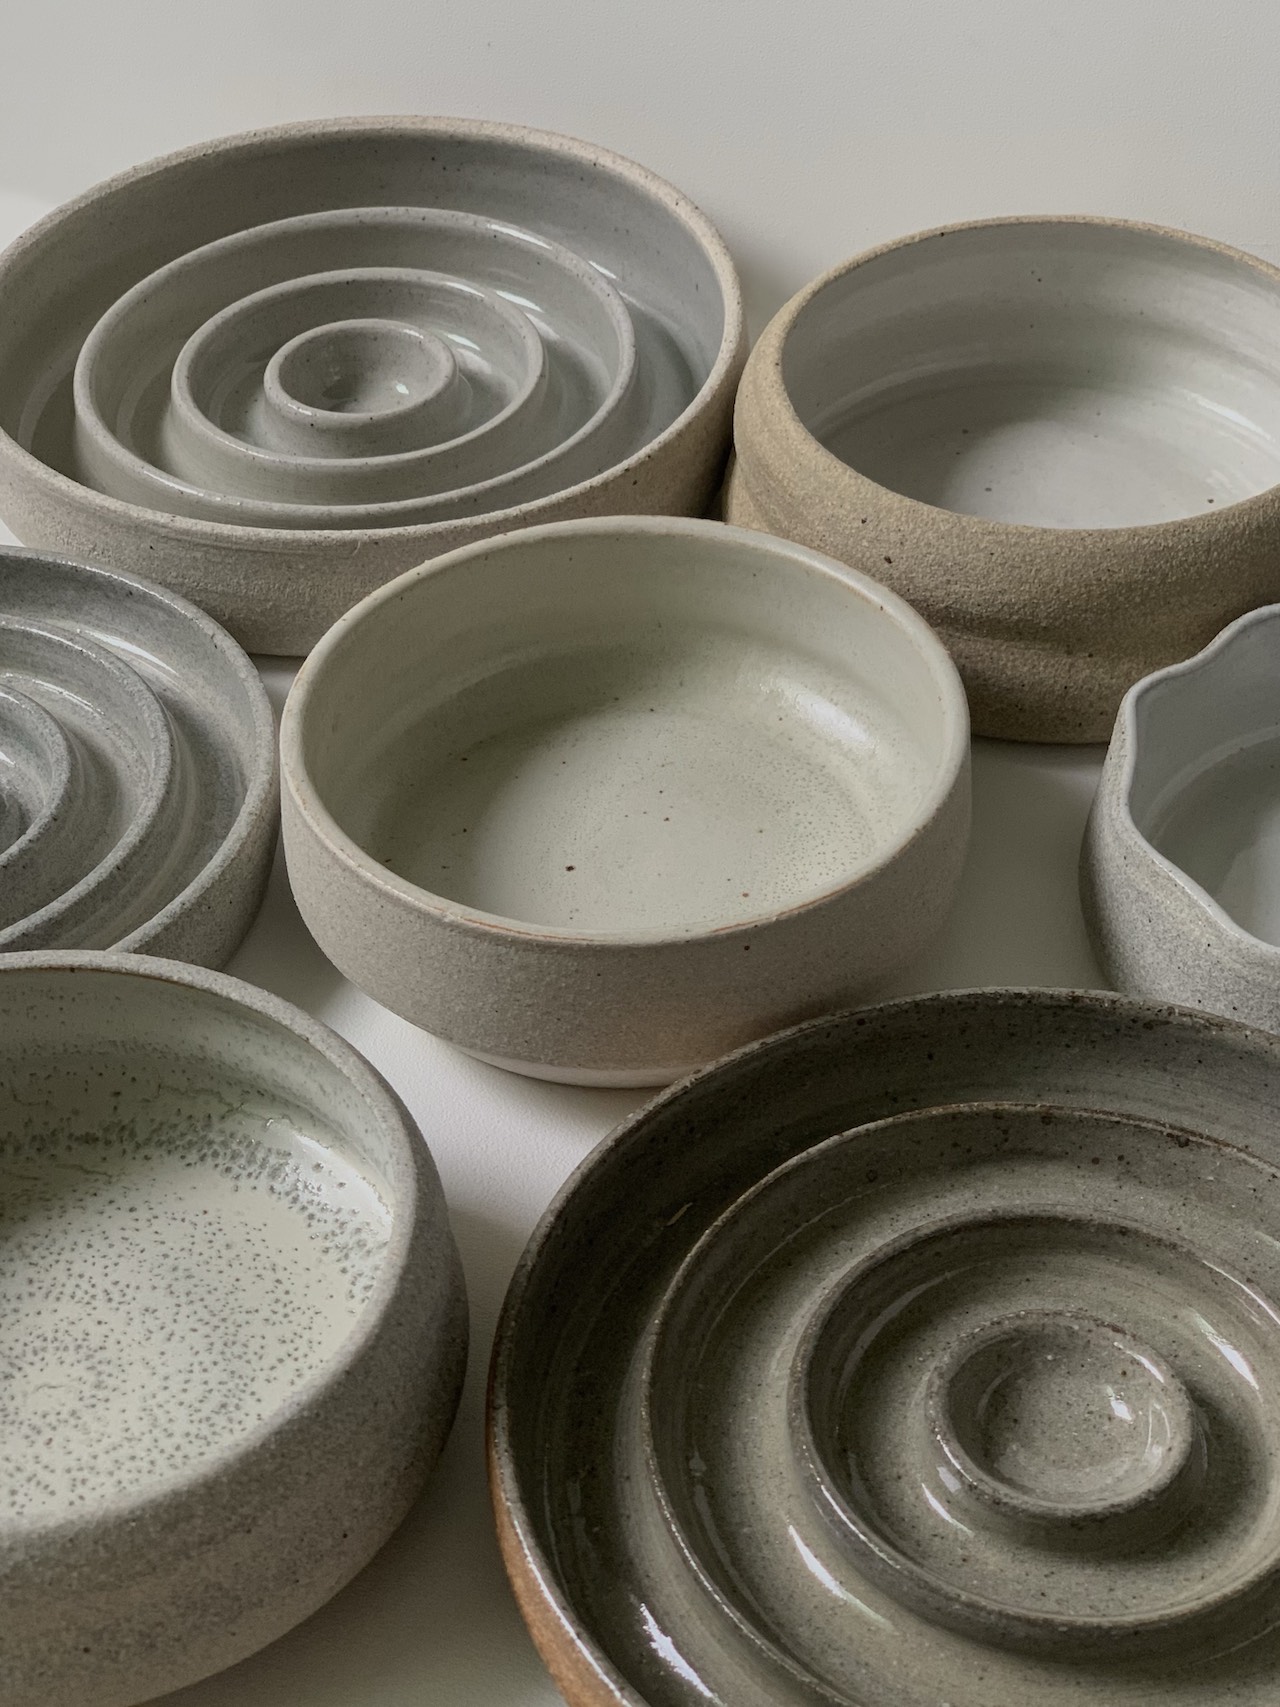 Various ceramic slow feeder bowls and regular bowls for pets for @pawrentceramics on Instagram